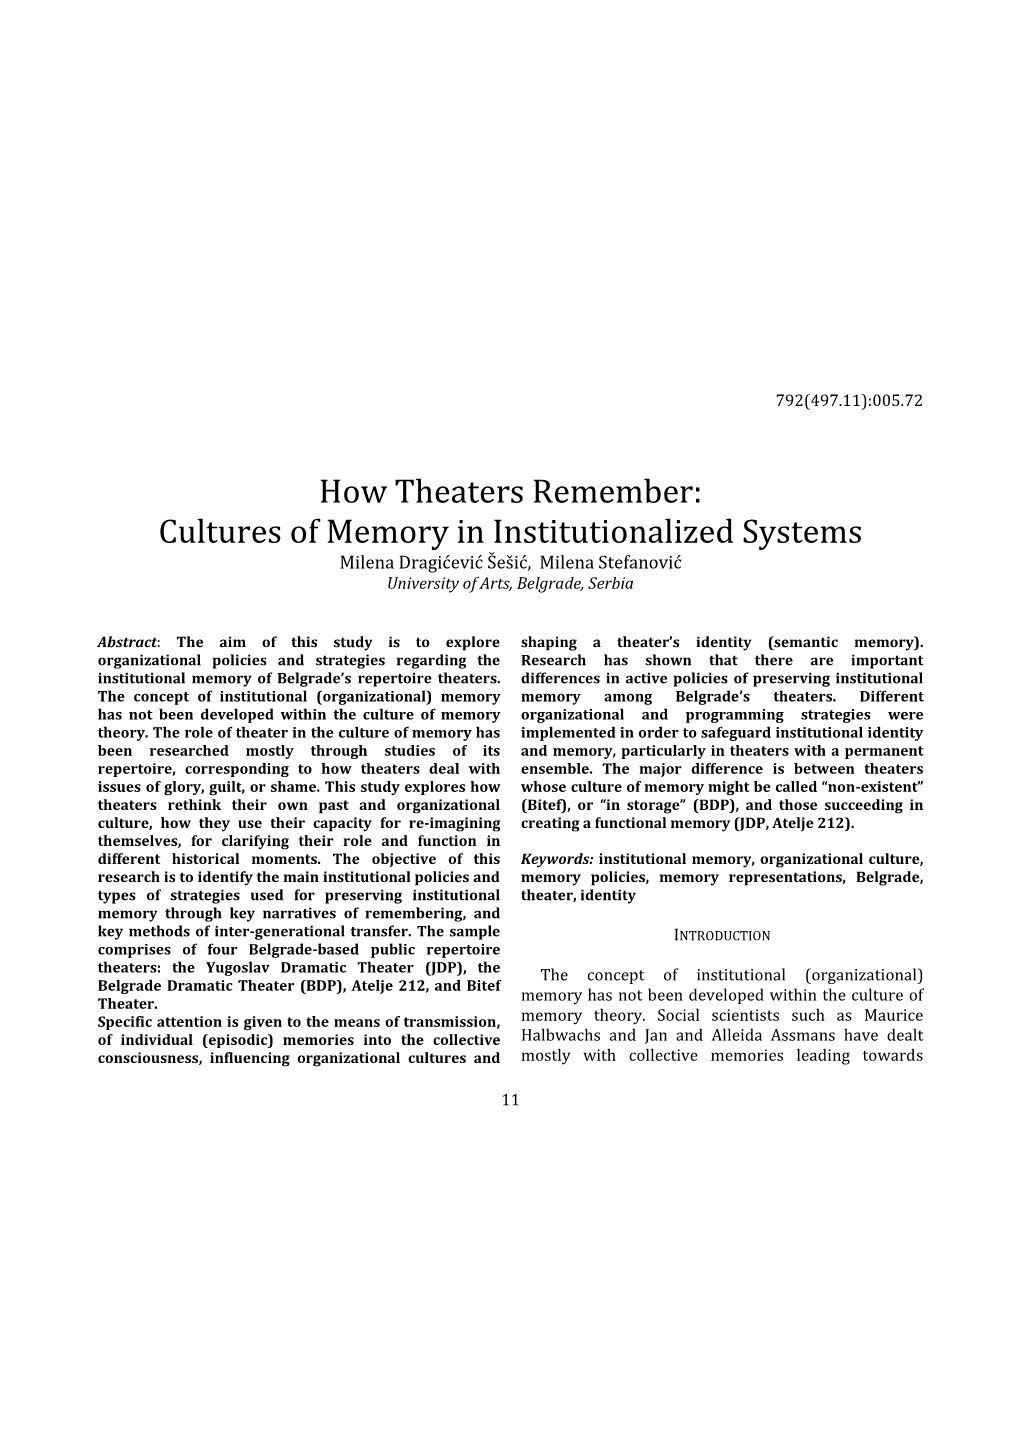 How Theaters Remember: Cultures of Memory in Institutionalized Systems Milena Dragićević Šešić, Milena Stefanović University of Arts, Belgrade, Serbia